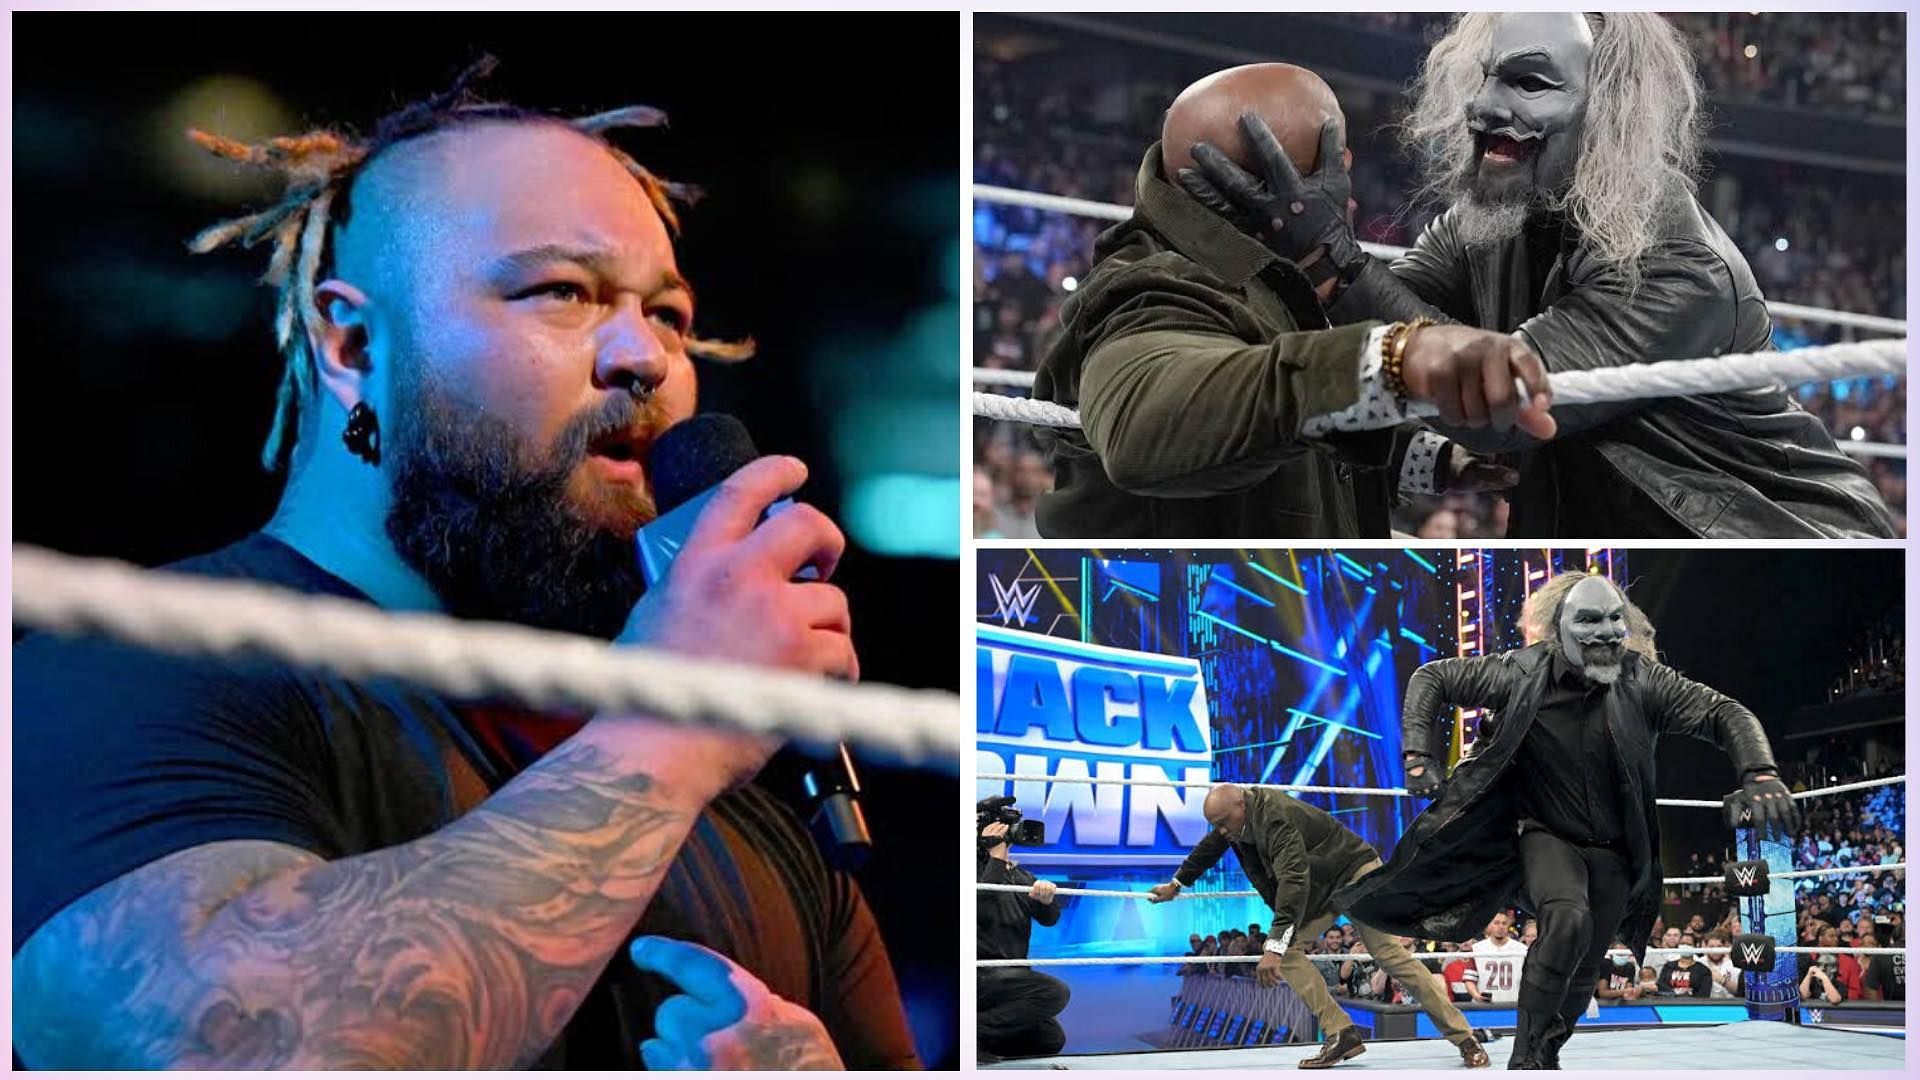 Bray Wyatt may seek revenge on Bobby Lashley following WWE SmackDown